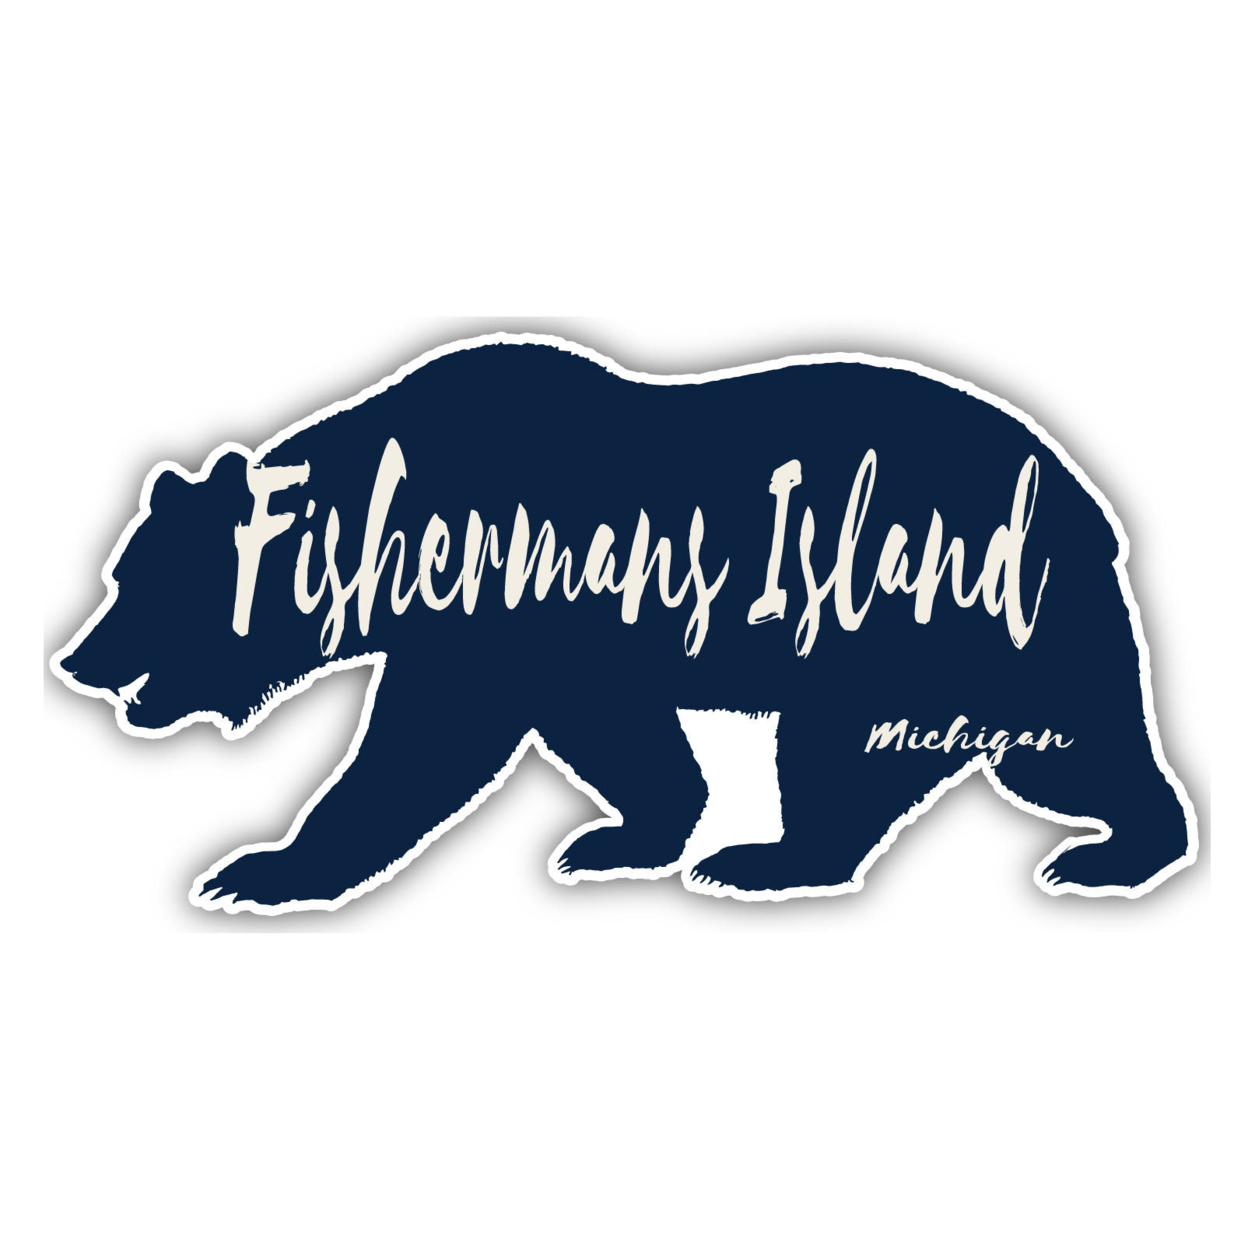 Fishermans Island Michigan Souvenir Decorative Stickers (Choose Theme And Size) - Single Unit, 2-Inch, Bear